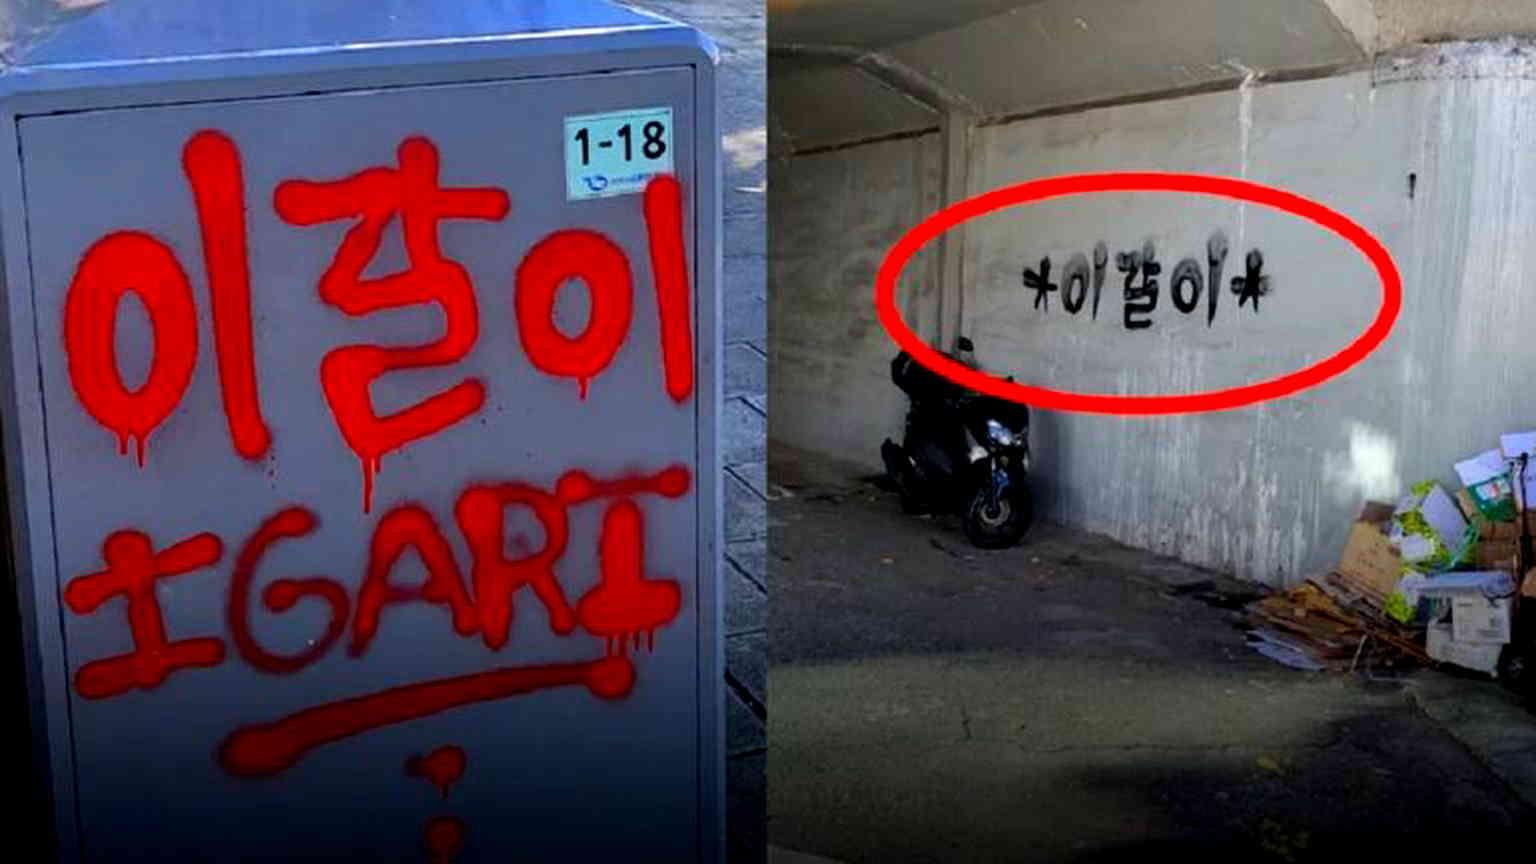 American tourist faces investigation for graffiti spree on over 155 locations in Seoul